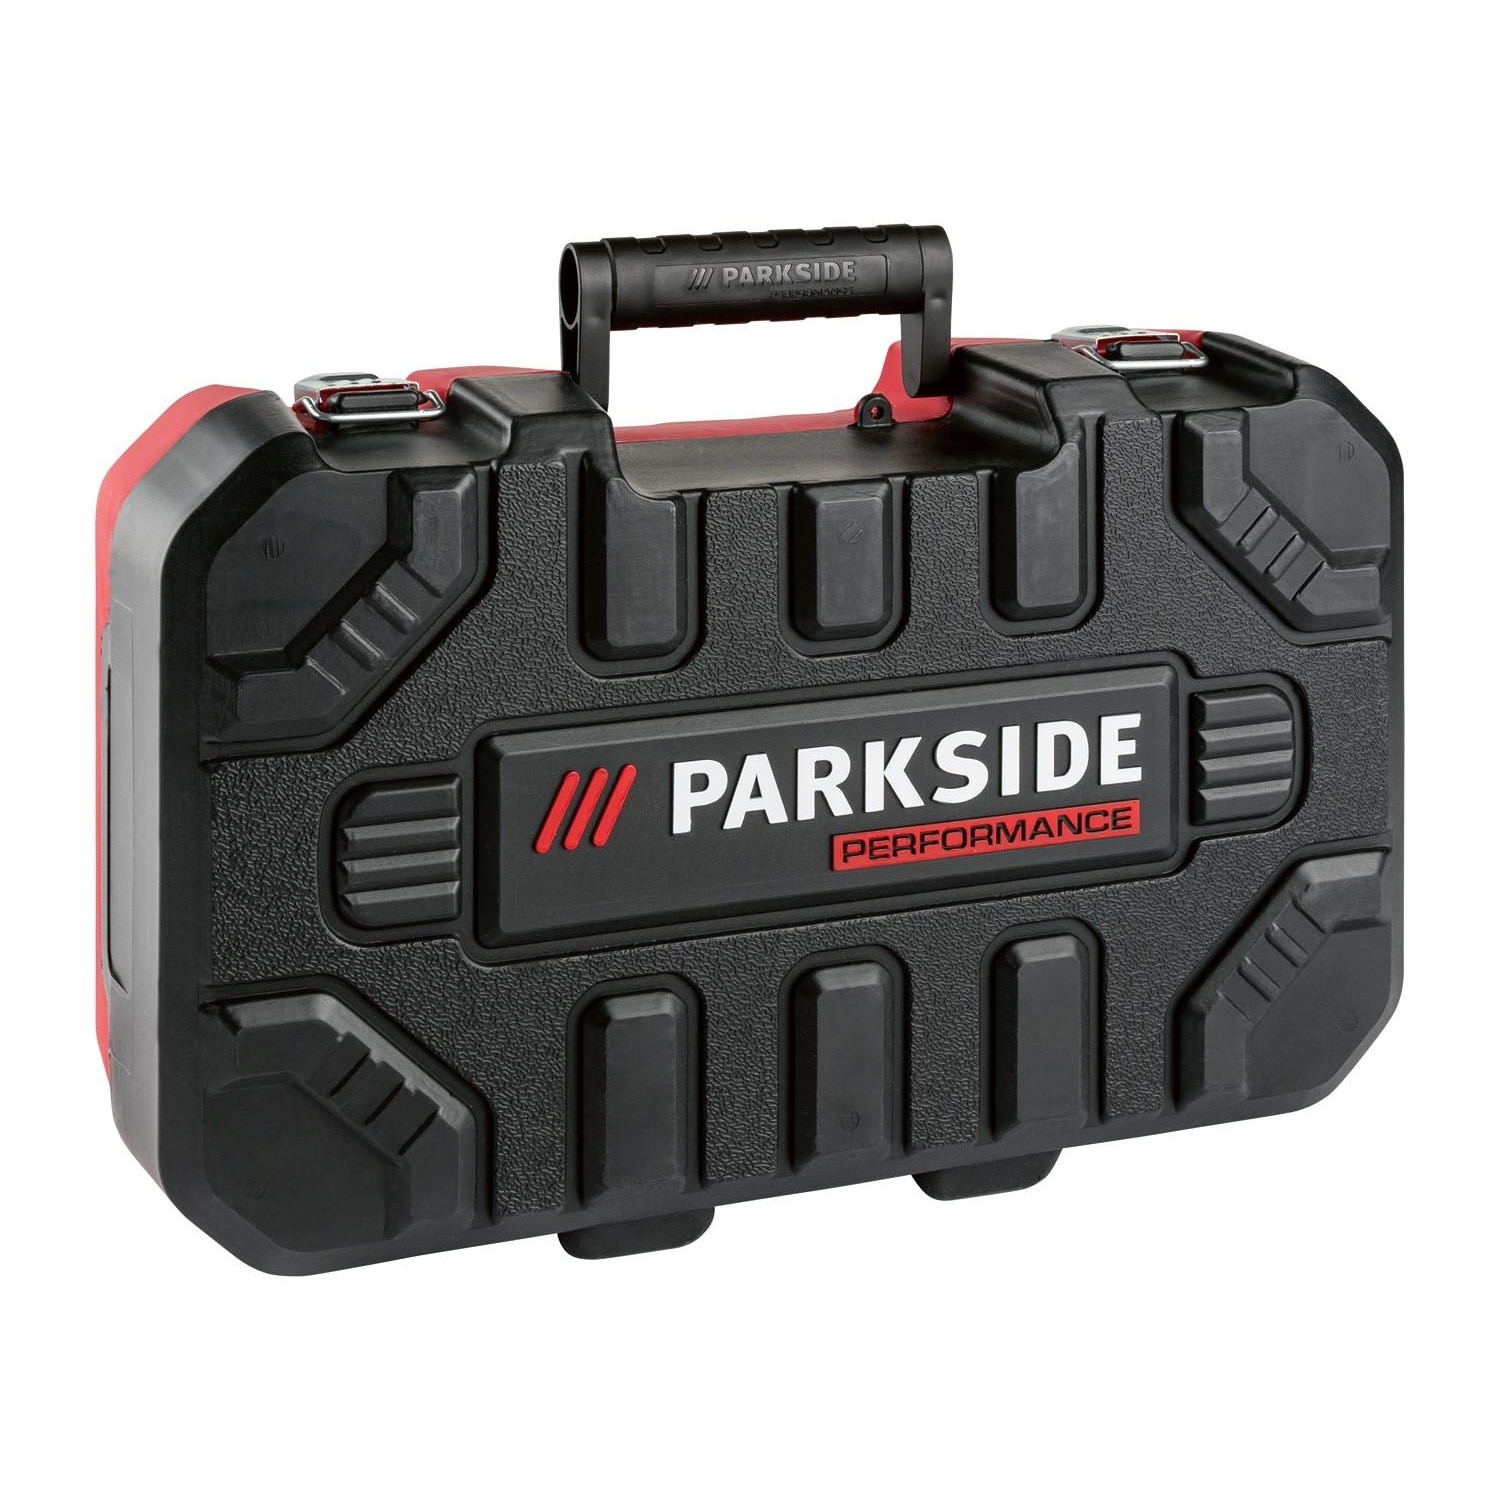 ParkSide Performance PDSSAP 20-Li A1 20V 2Ah BL akkus